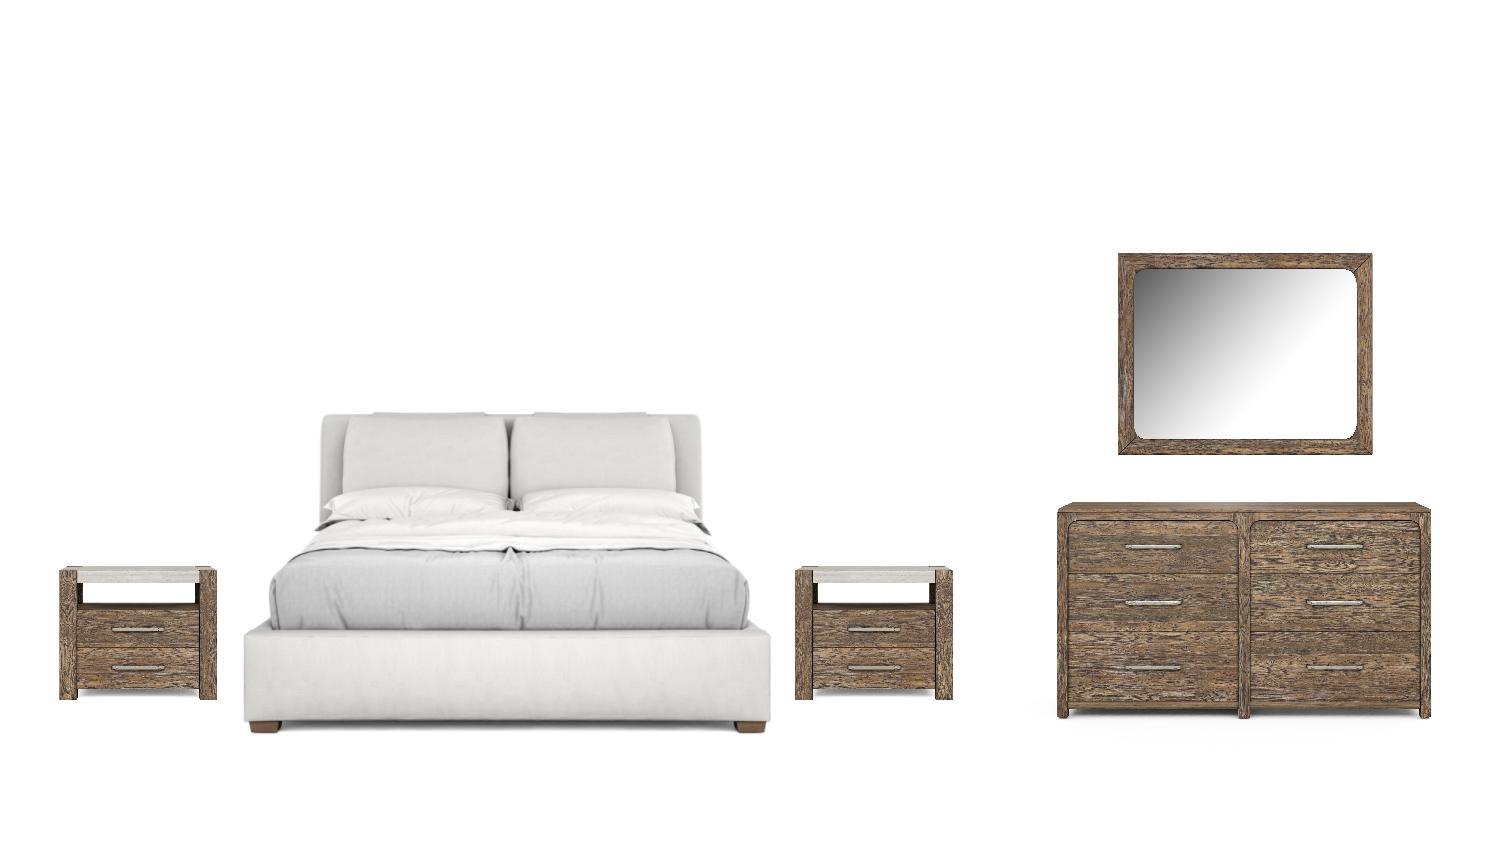 Modern, Transitional Platform Bedroom Set Stockyard 284127-2303-WH-2NDM-5PCS in Light Gray, White Fabric